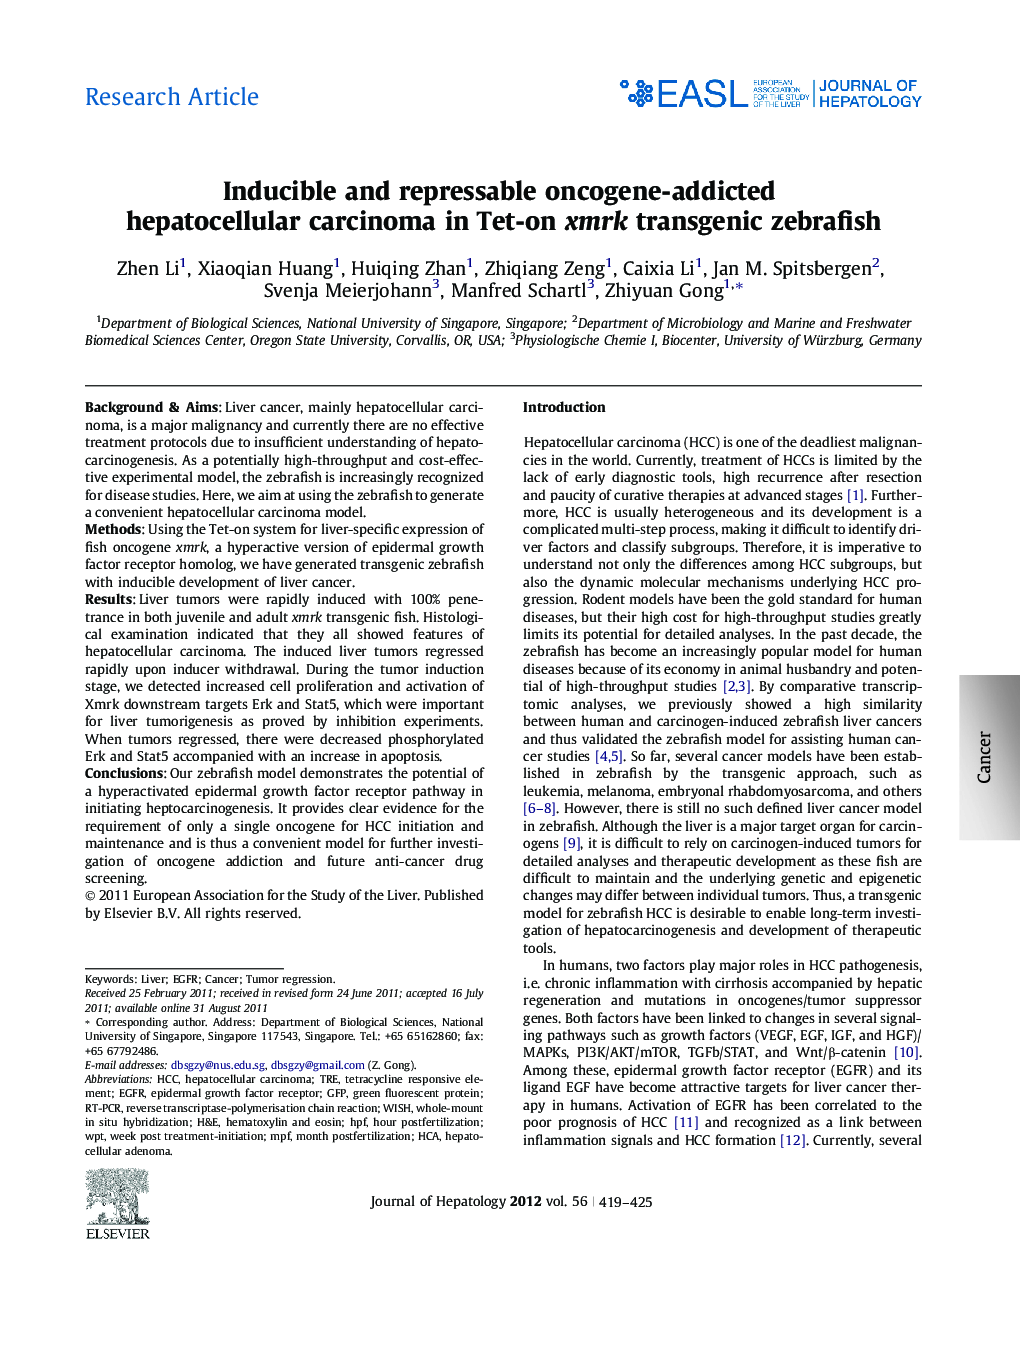 Research ArticleInducible and repressable oncogene-addicted hepatocellular carcinoma in Tet-on xmrk transgenic zebrafish